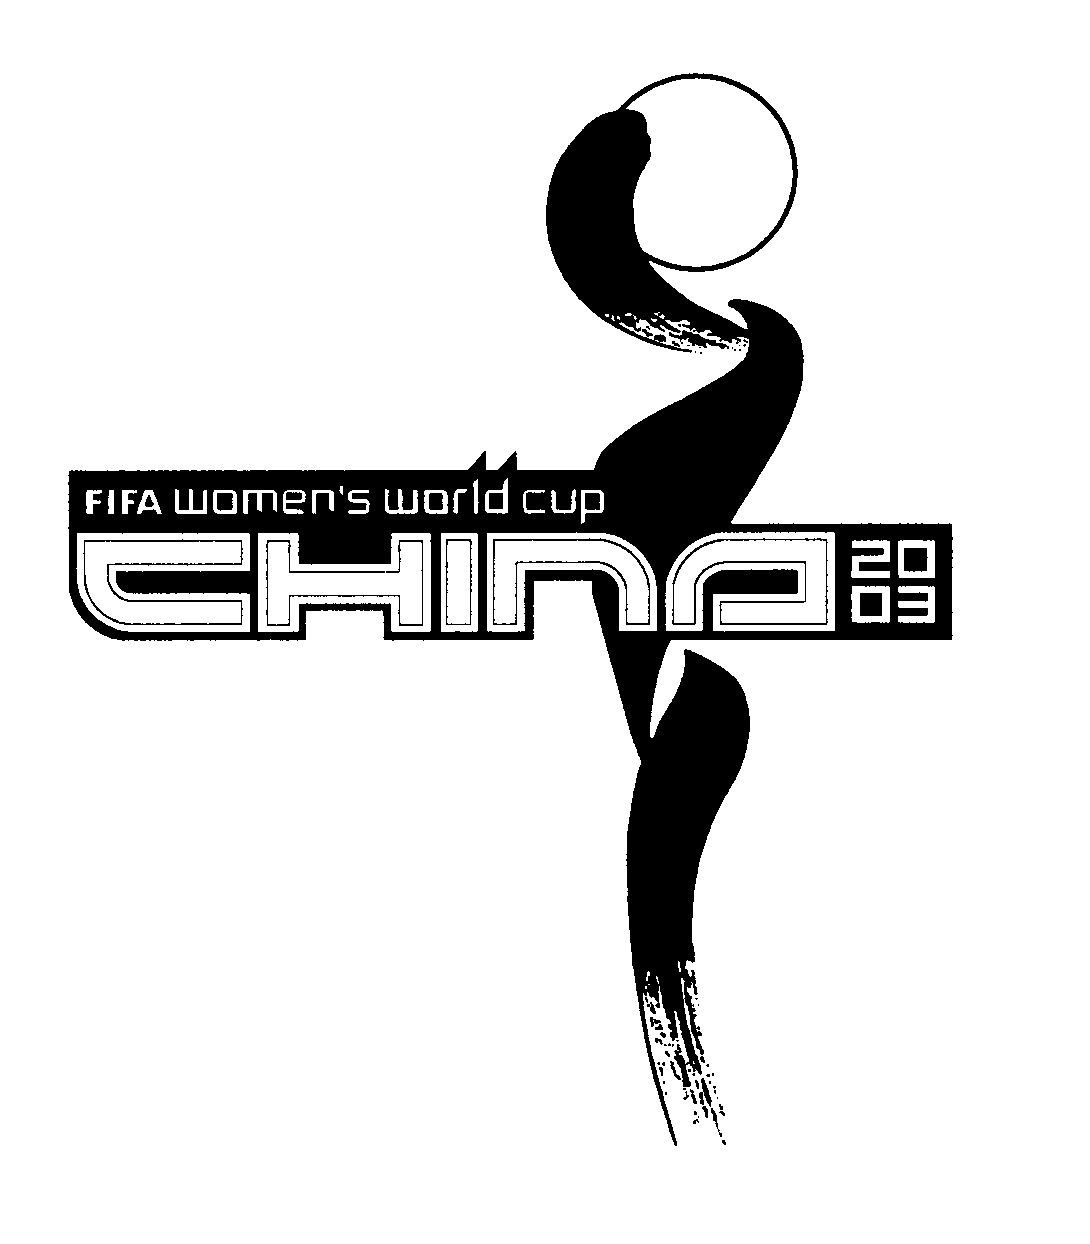  FIFA WOMEN'S WORLD CUP CHINA 2003